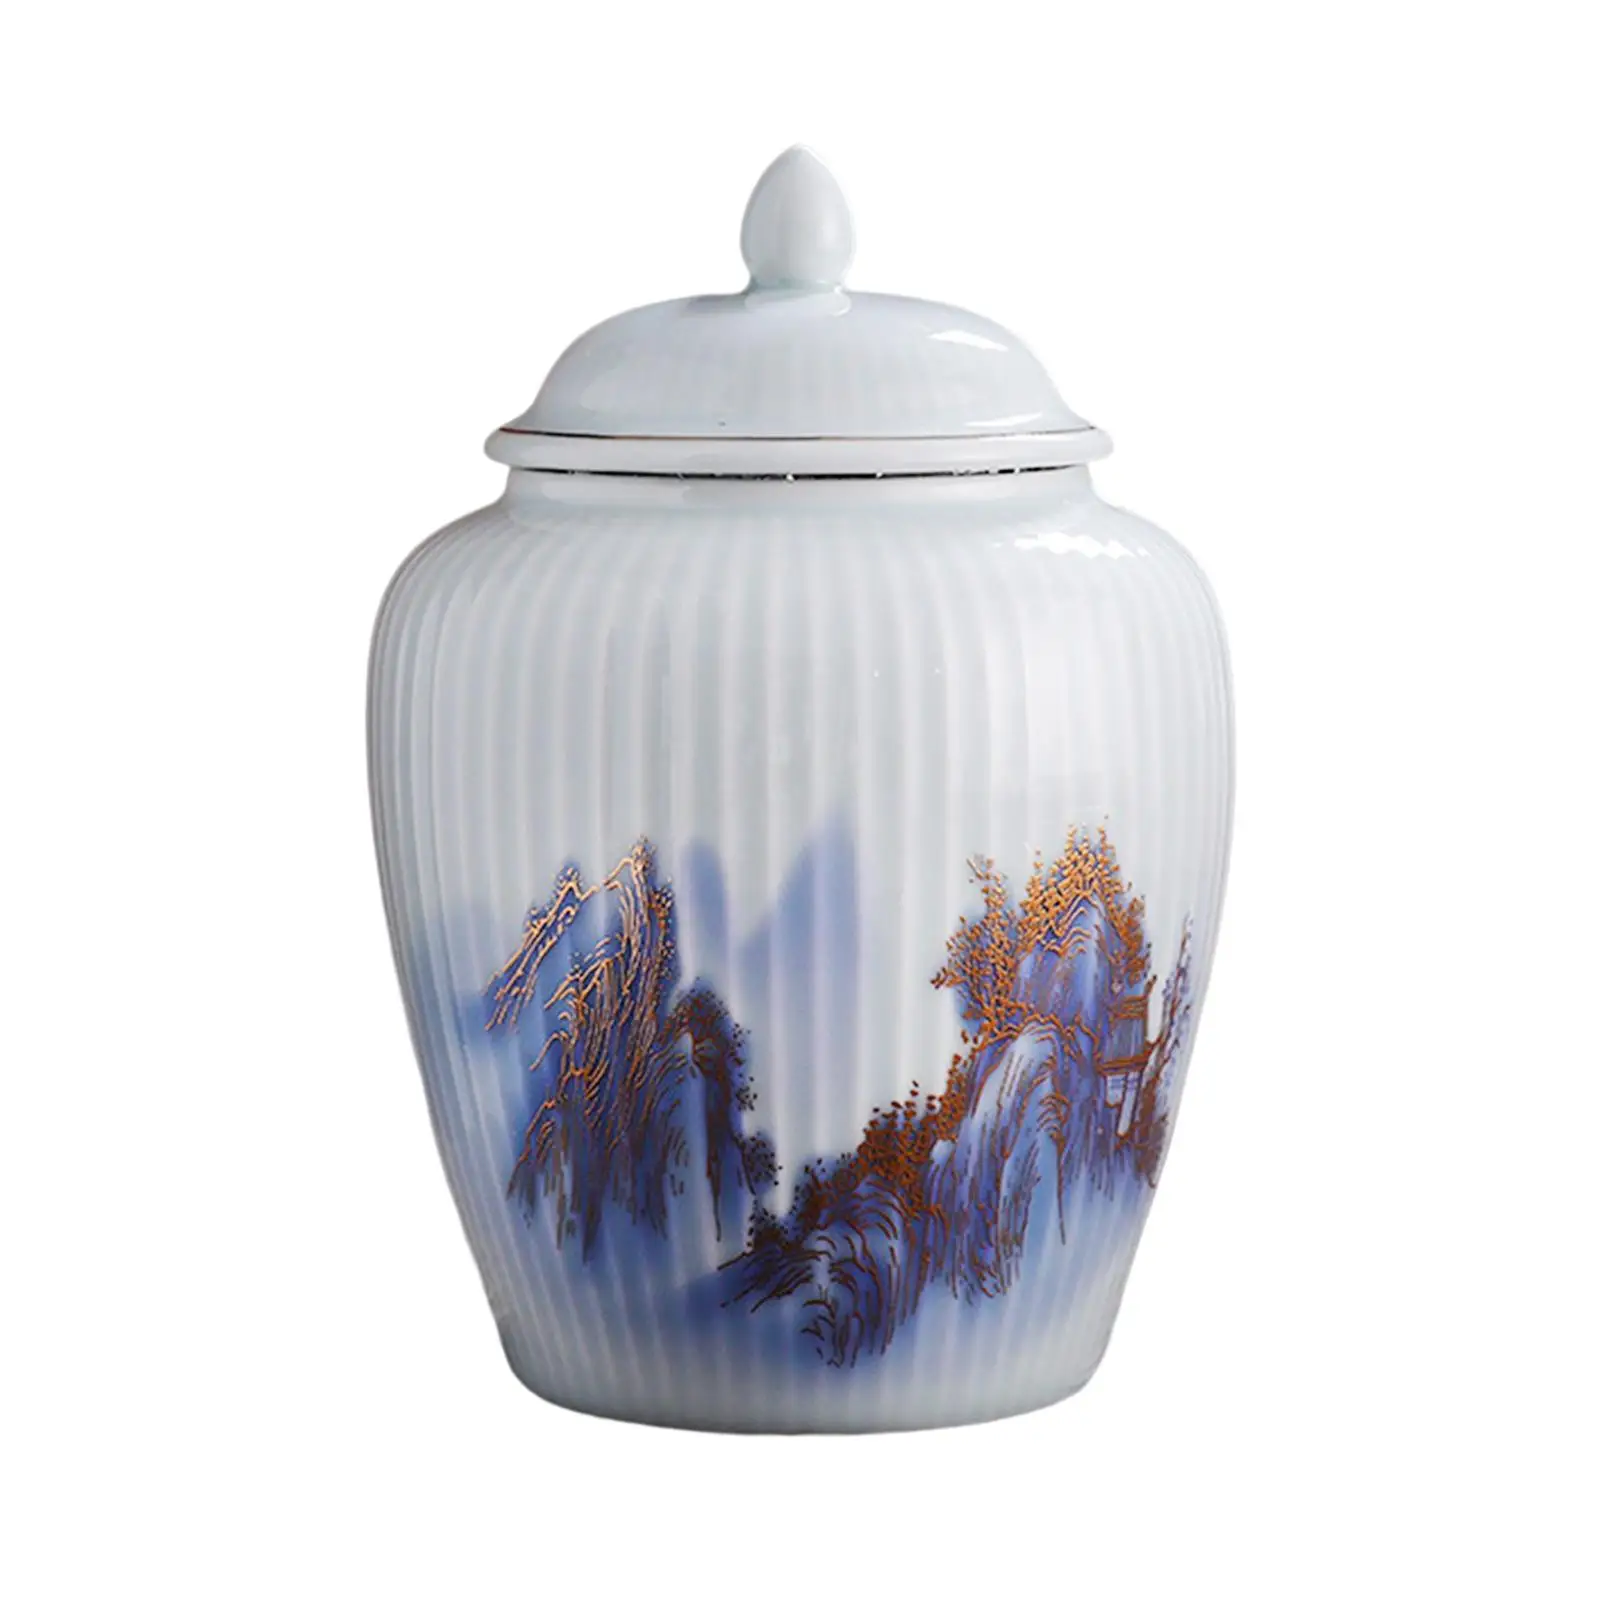 Traditional Flower Vase Temple Jar with Lid Table Centerpieces Plants Holder for Office Flower Arrangement Bedroom